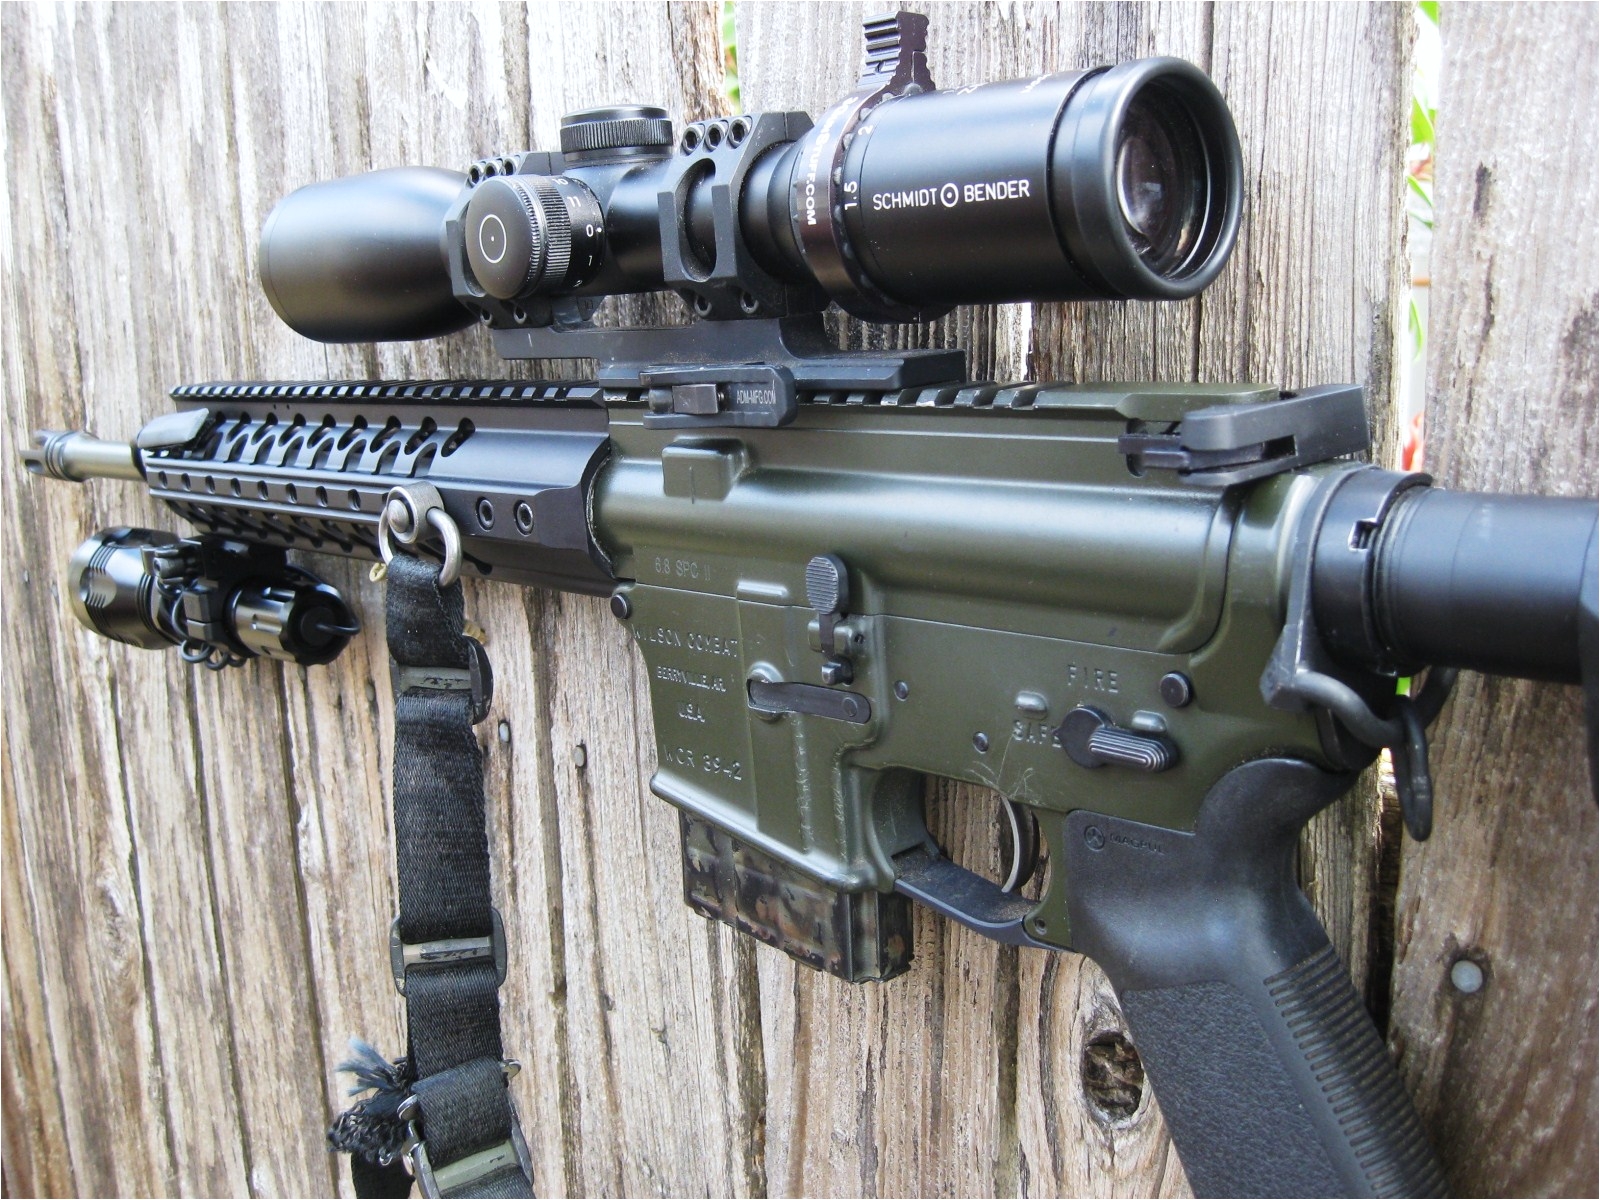 selph arms vrl 1 green led hunting light review gun reviews tactical gun review